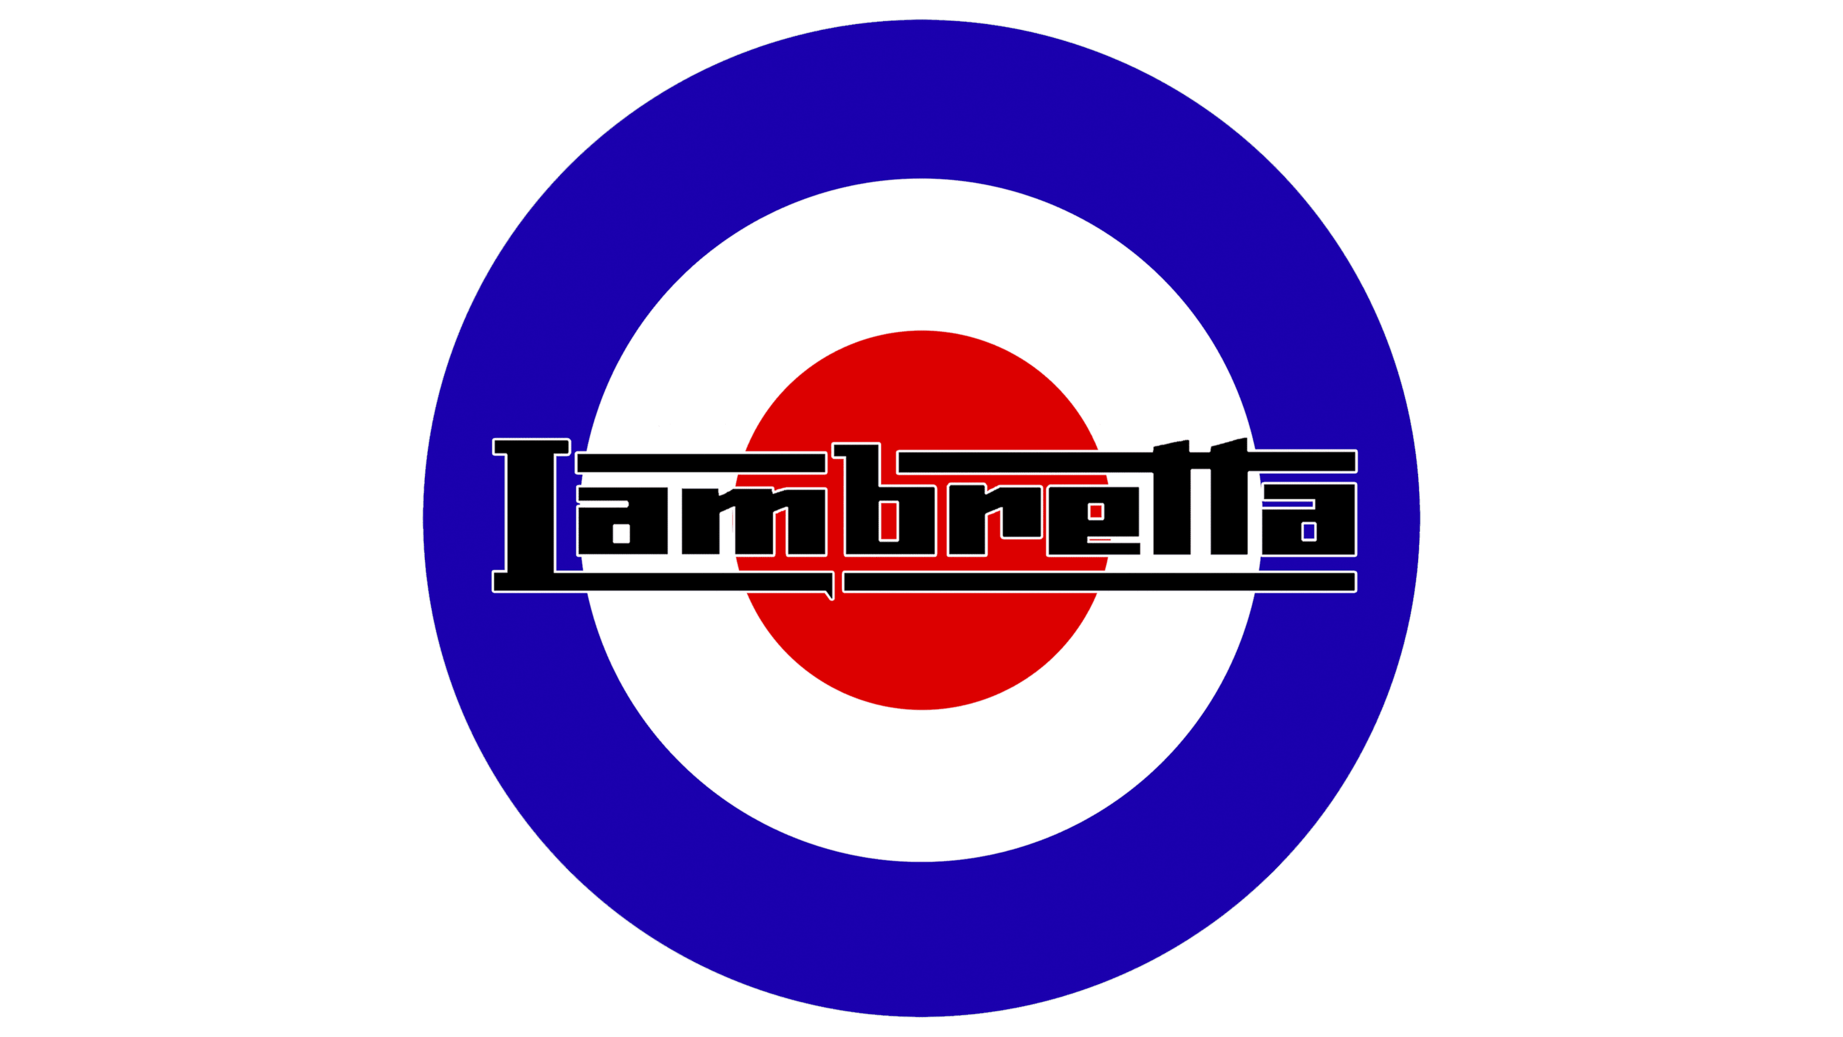 Lambretta symbol